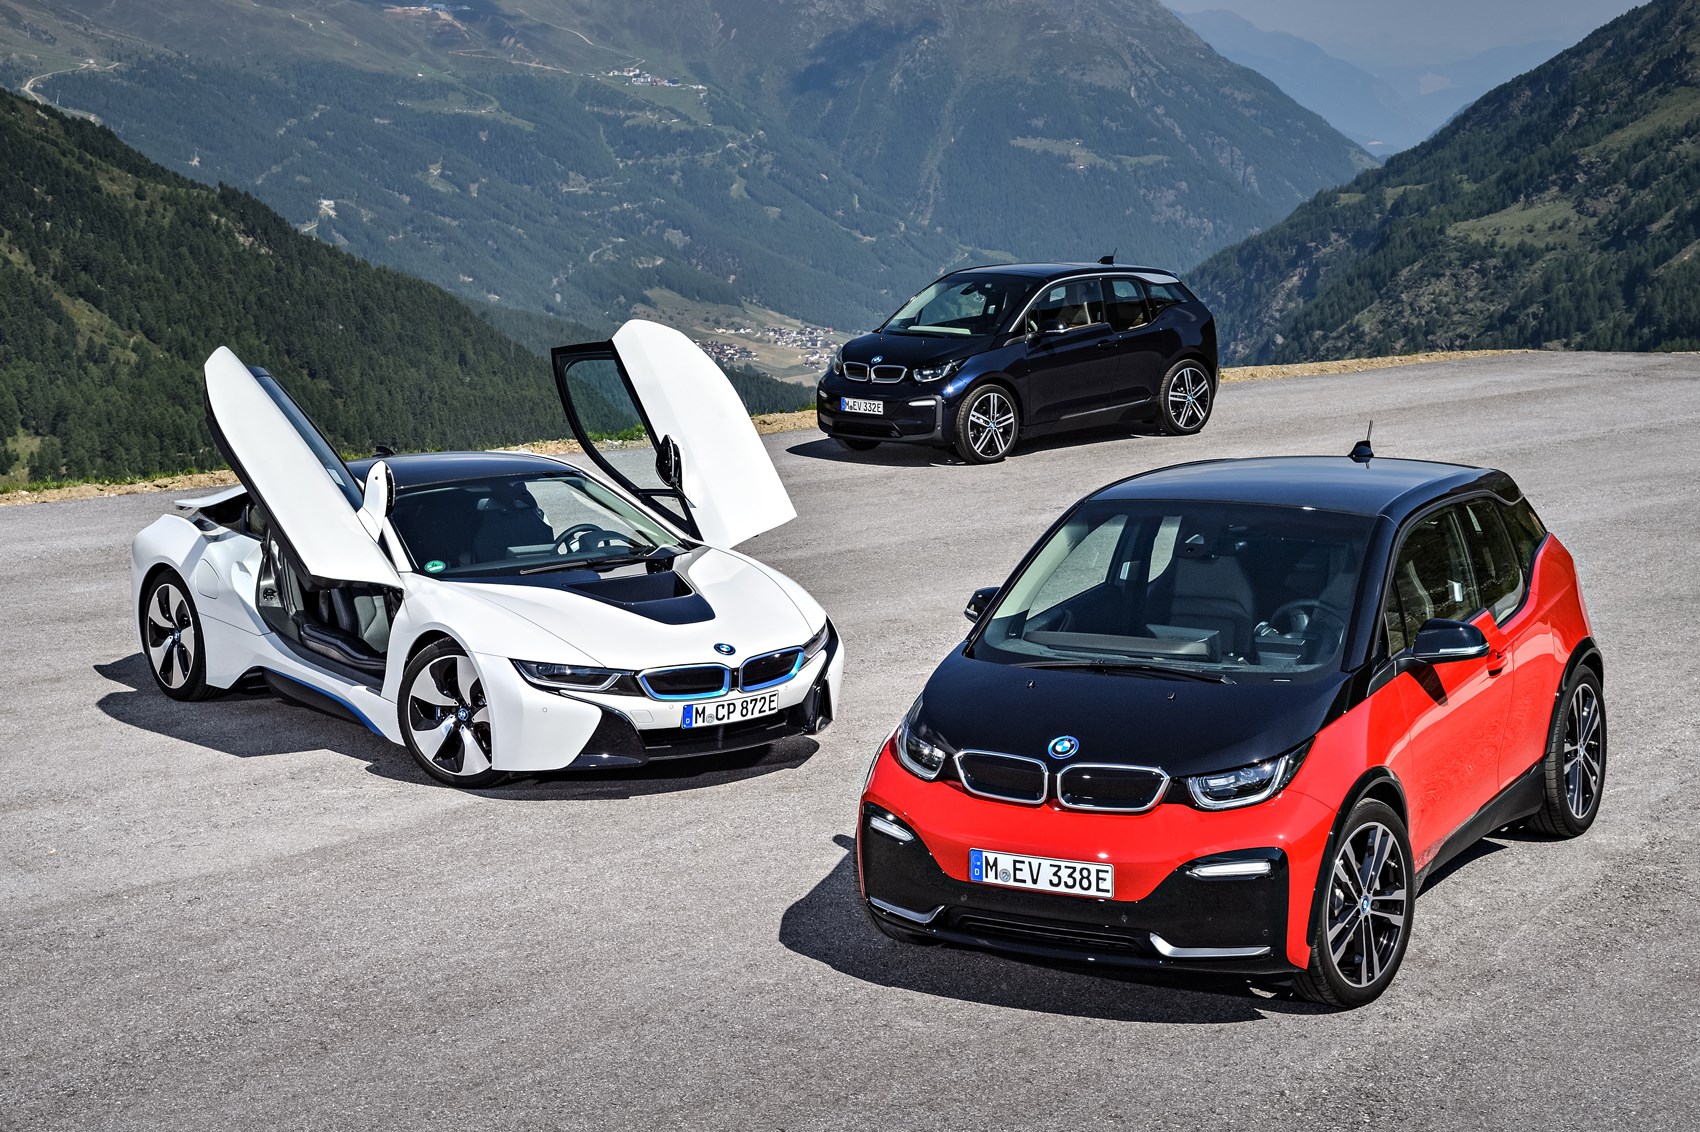 Why BMW's i3 Electric Car is Really a Plug-in Hybrid